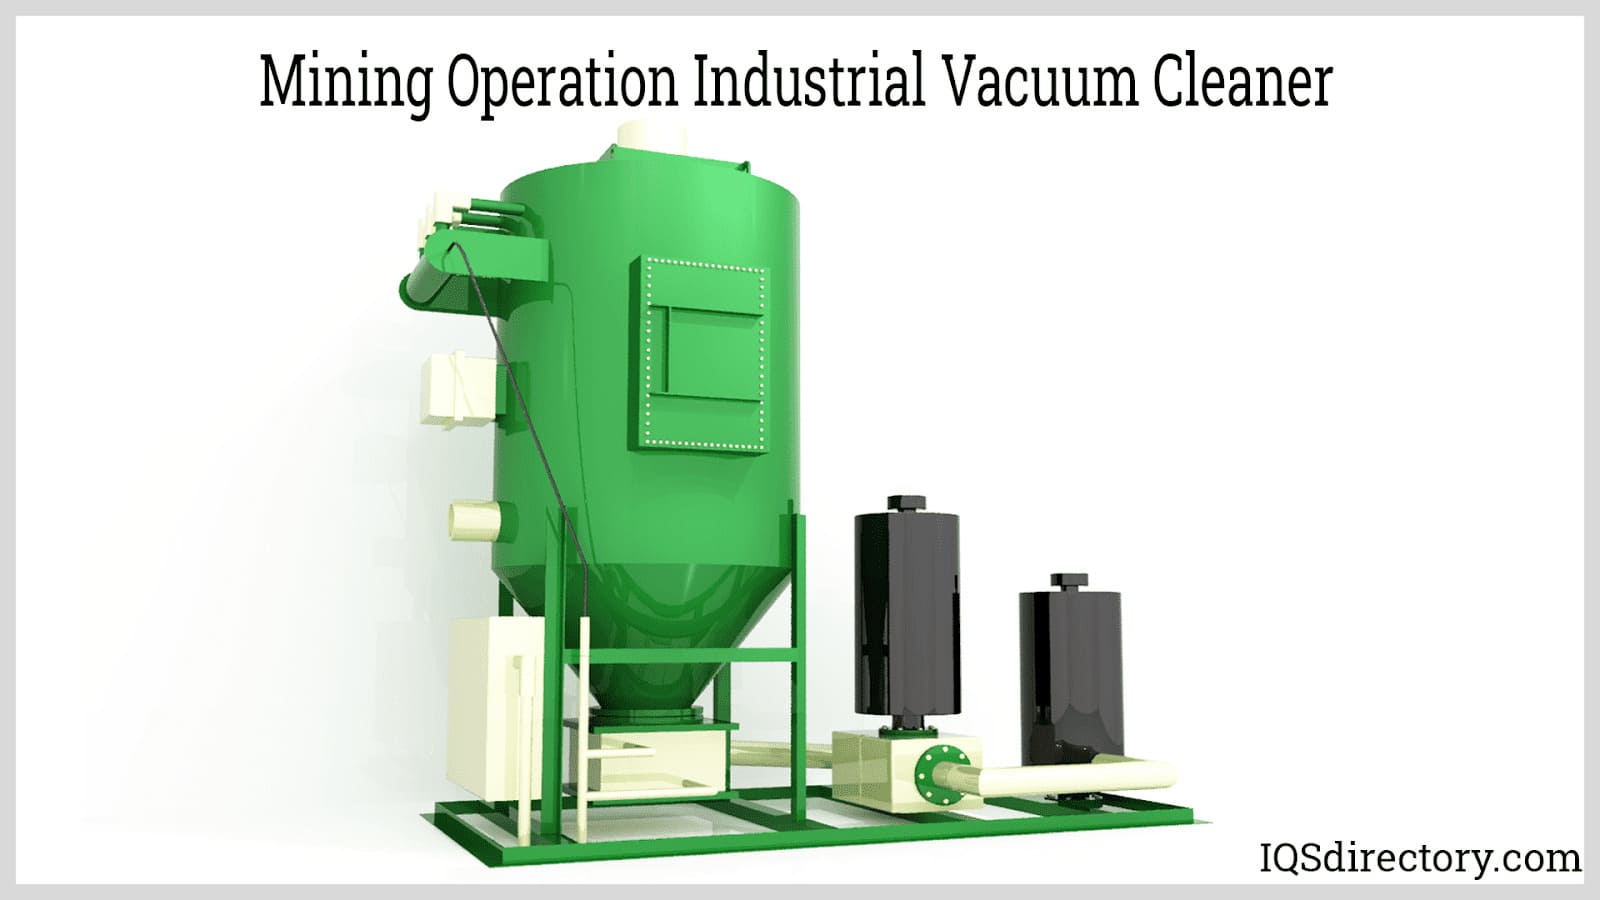 Mining Operation Industrial Vacuum Cleaner